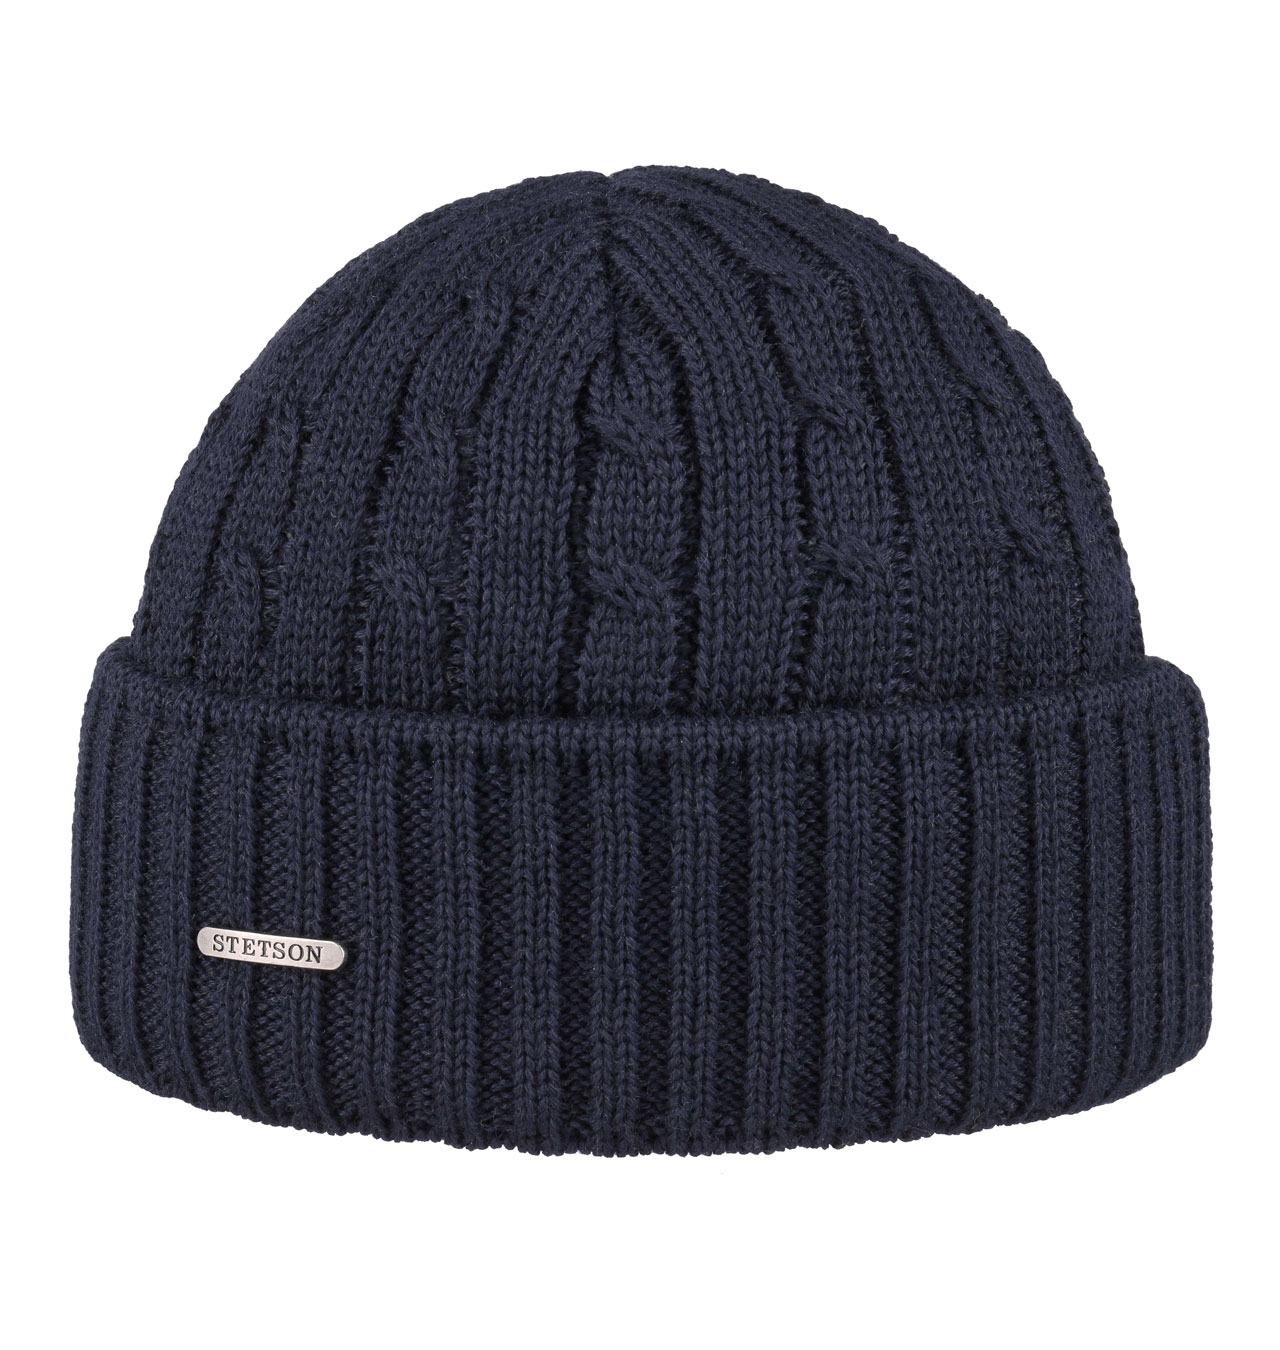 Stetson - Georgia Wool Knit Hat - Navy